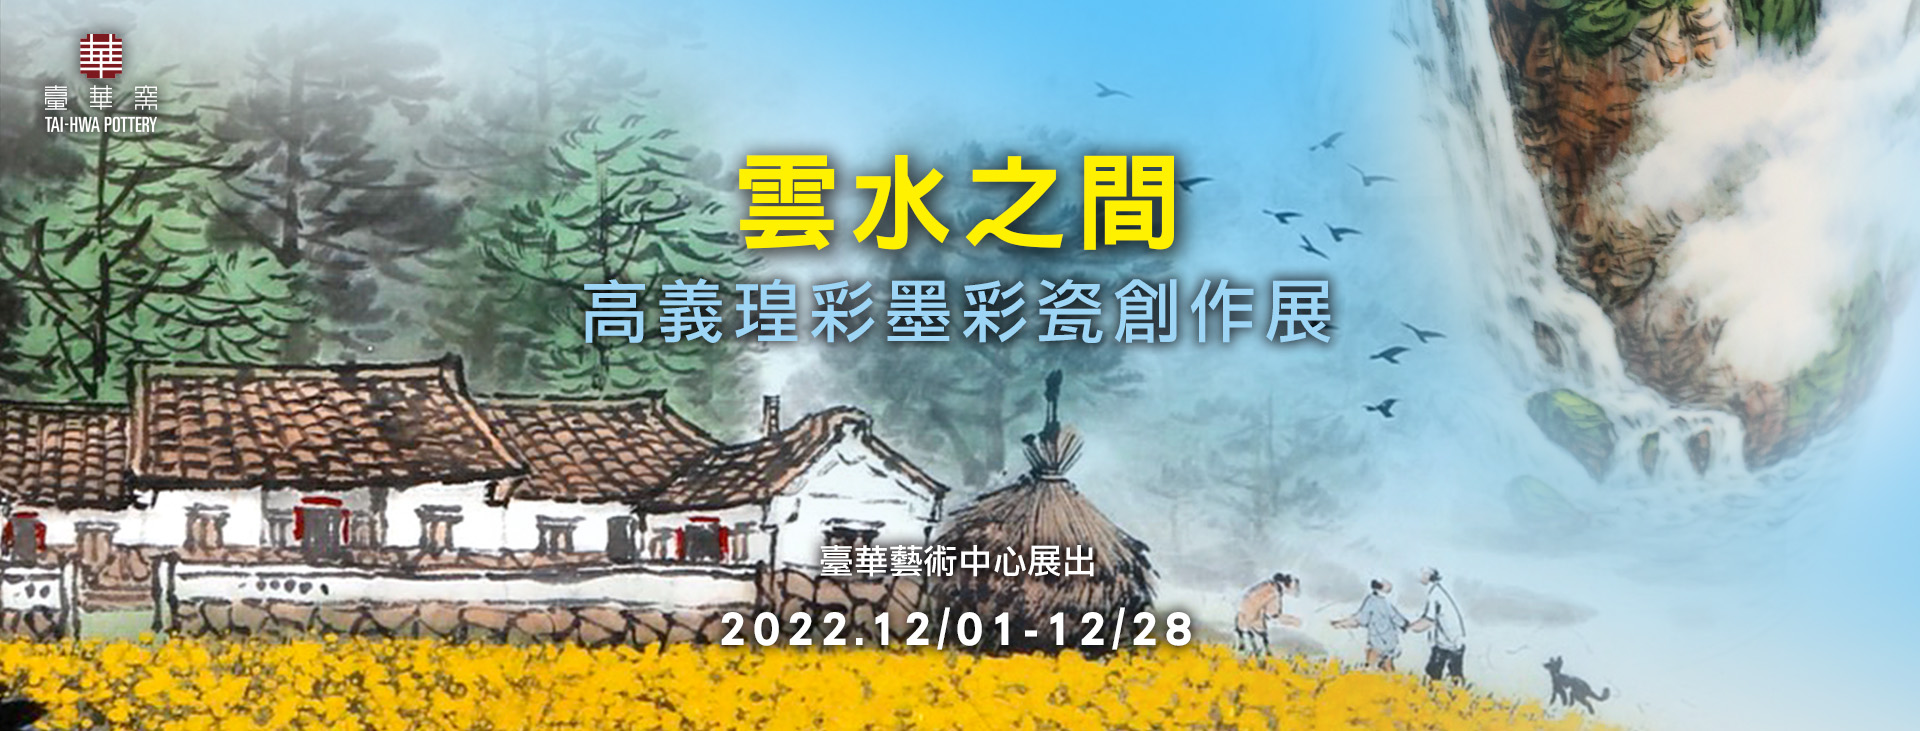 catalog/web menu/exhibition/2022/202212 G01雲水之間高義瑝-FB.jpg